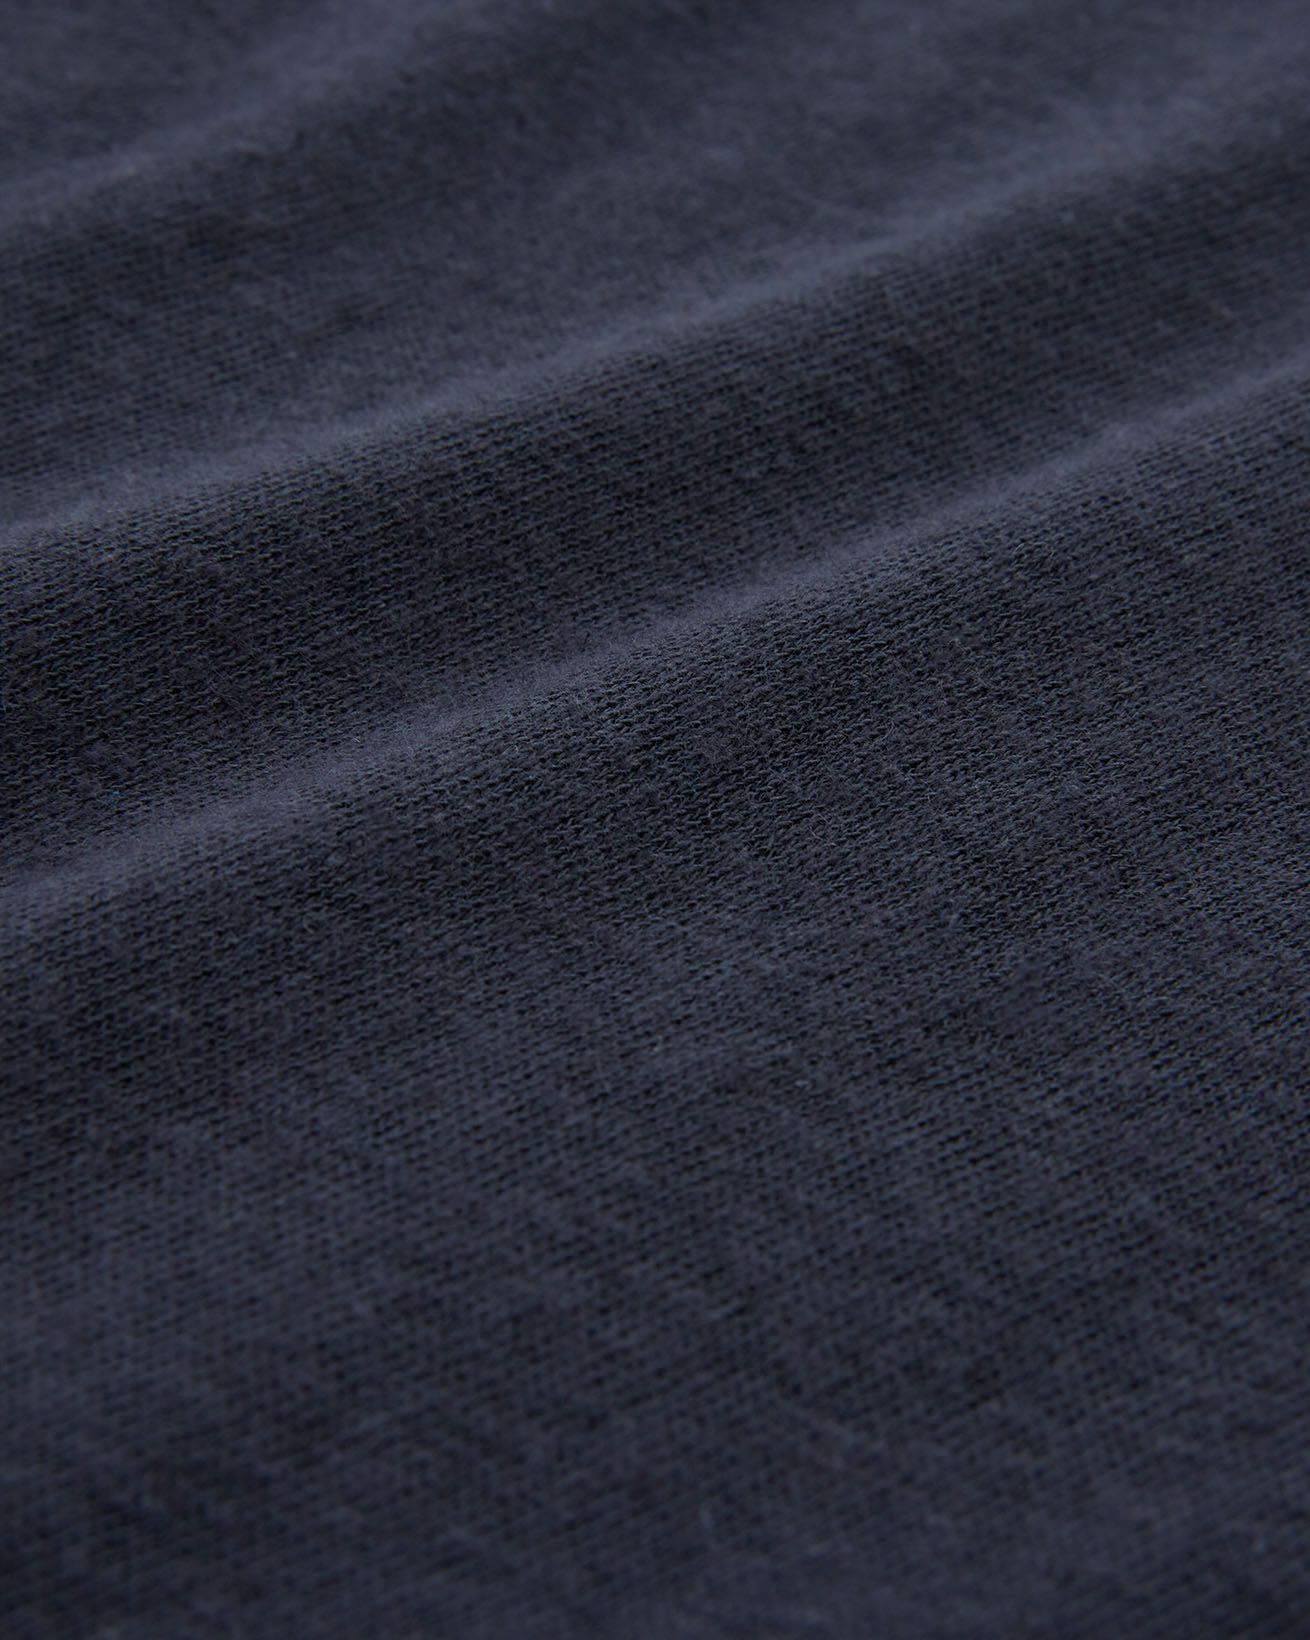 8421_linen-cotton-v-neck-t-shirt_navy_detail-3_web.jpg